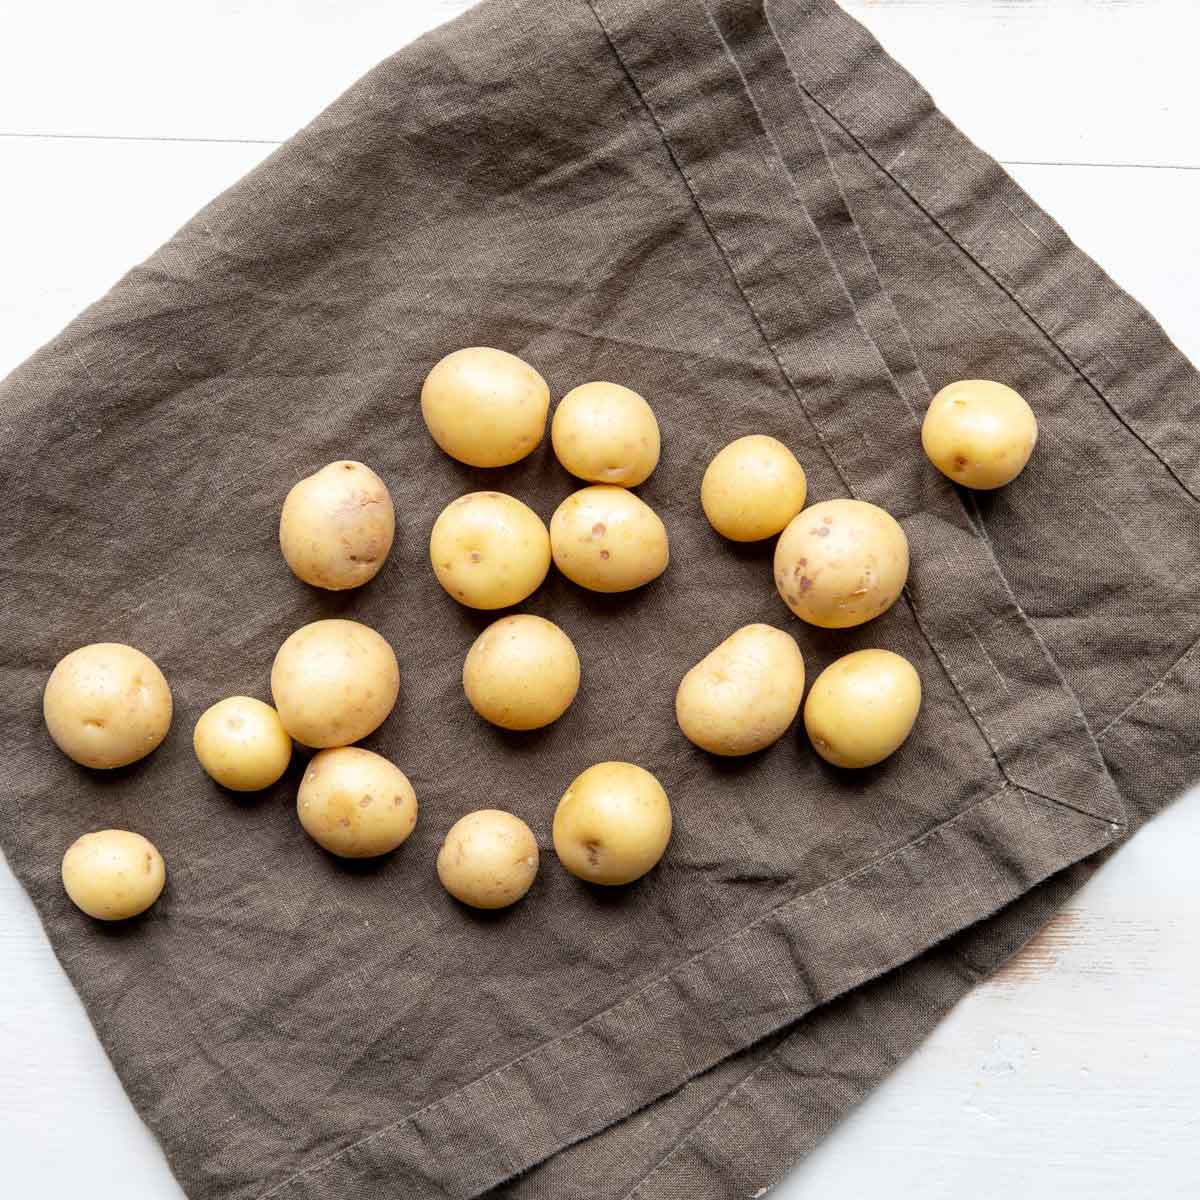 tiny Yukon gold potatoes on a napkin